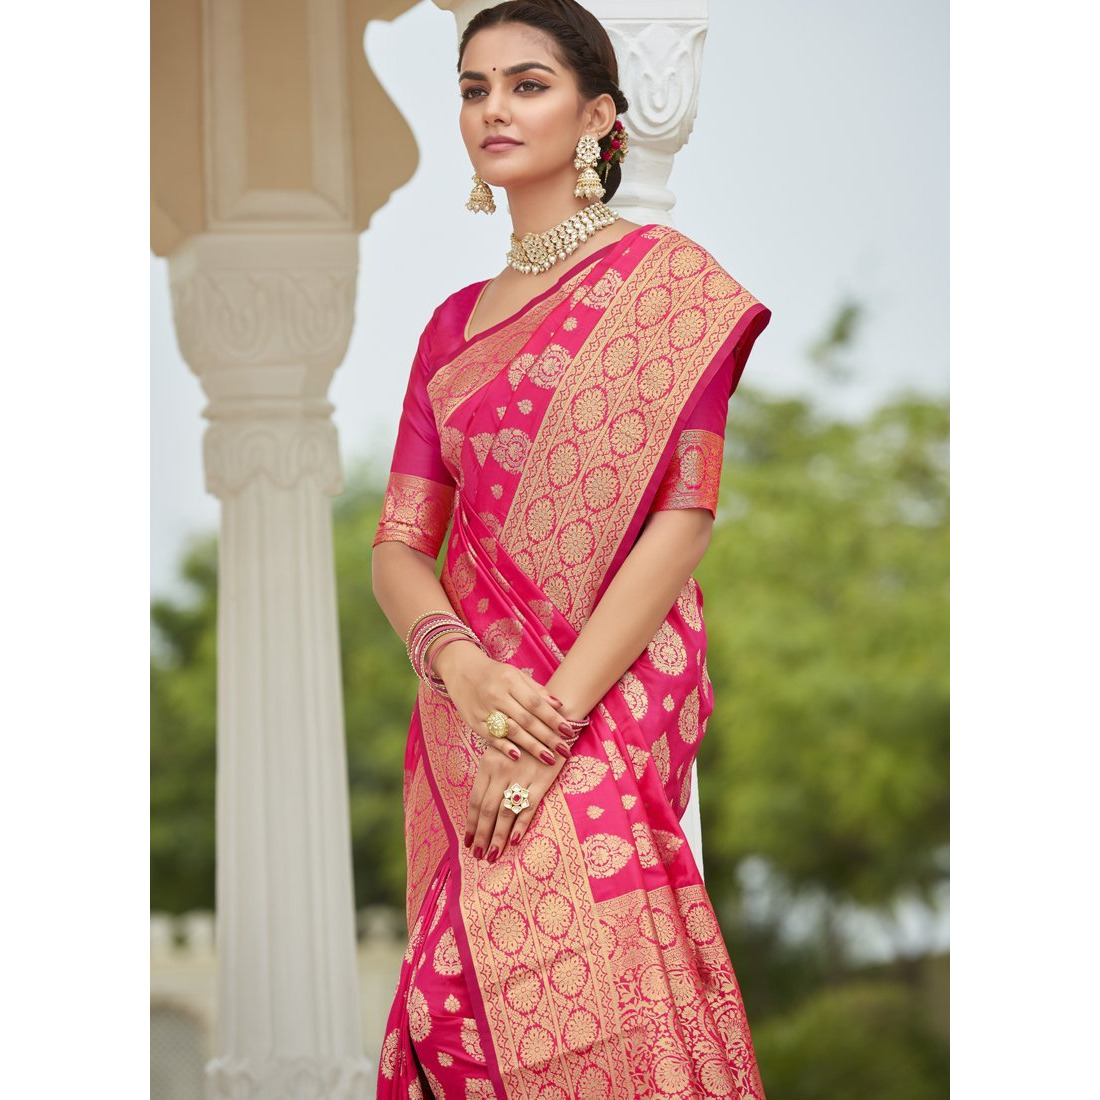 Designer Rani Silk Wedding Wear Saree For Women